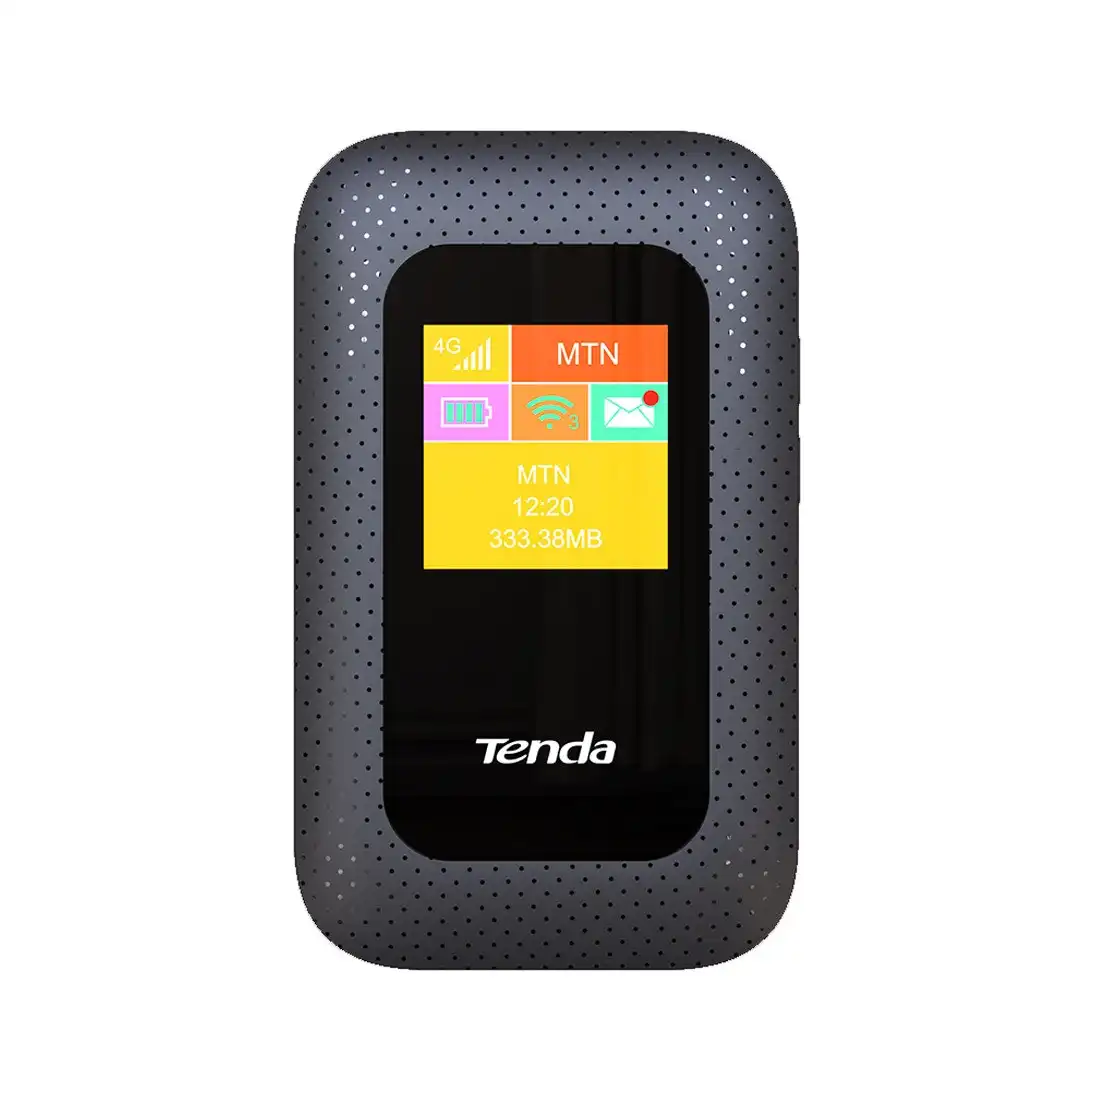 Tenda 4G185 4G LTE Advanced Pocket Mobile Wi-Fi Hotspot Device